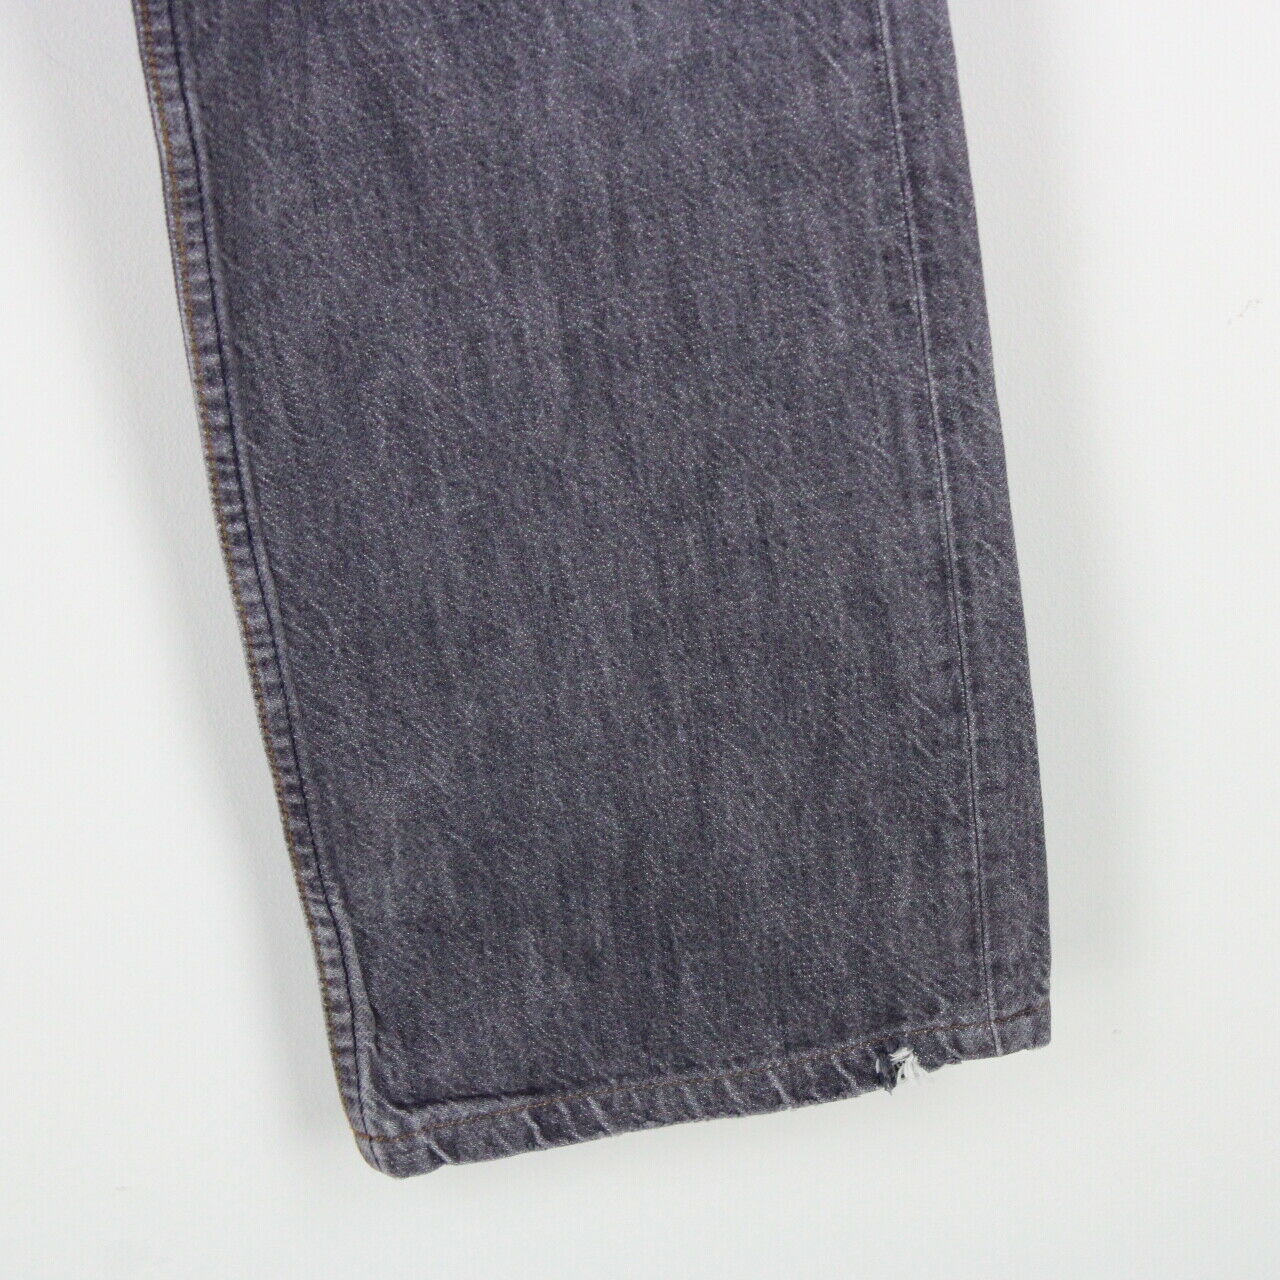 Mens LEVIS 501 Jeans Grey | W33 L30